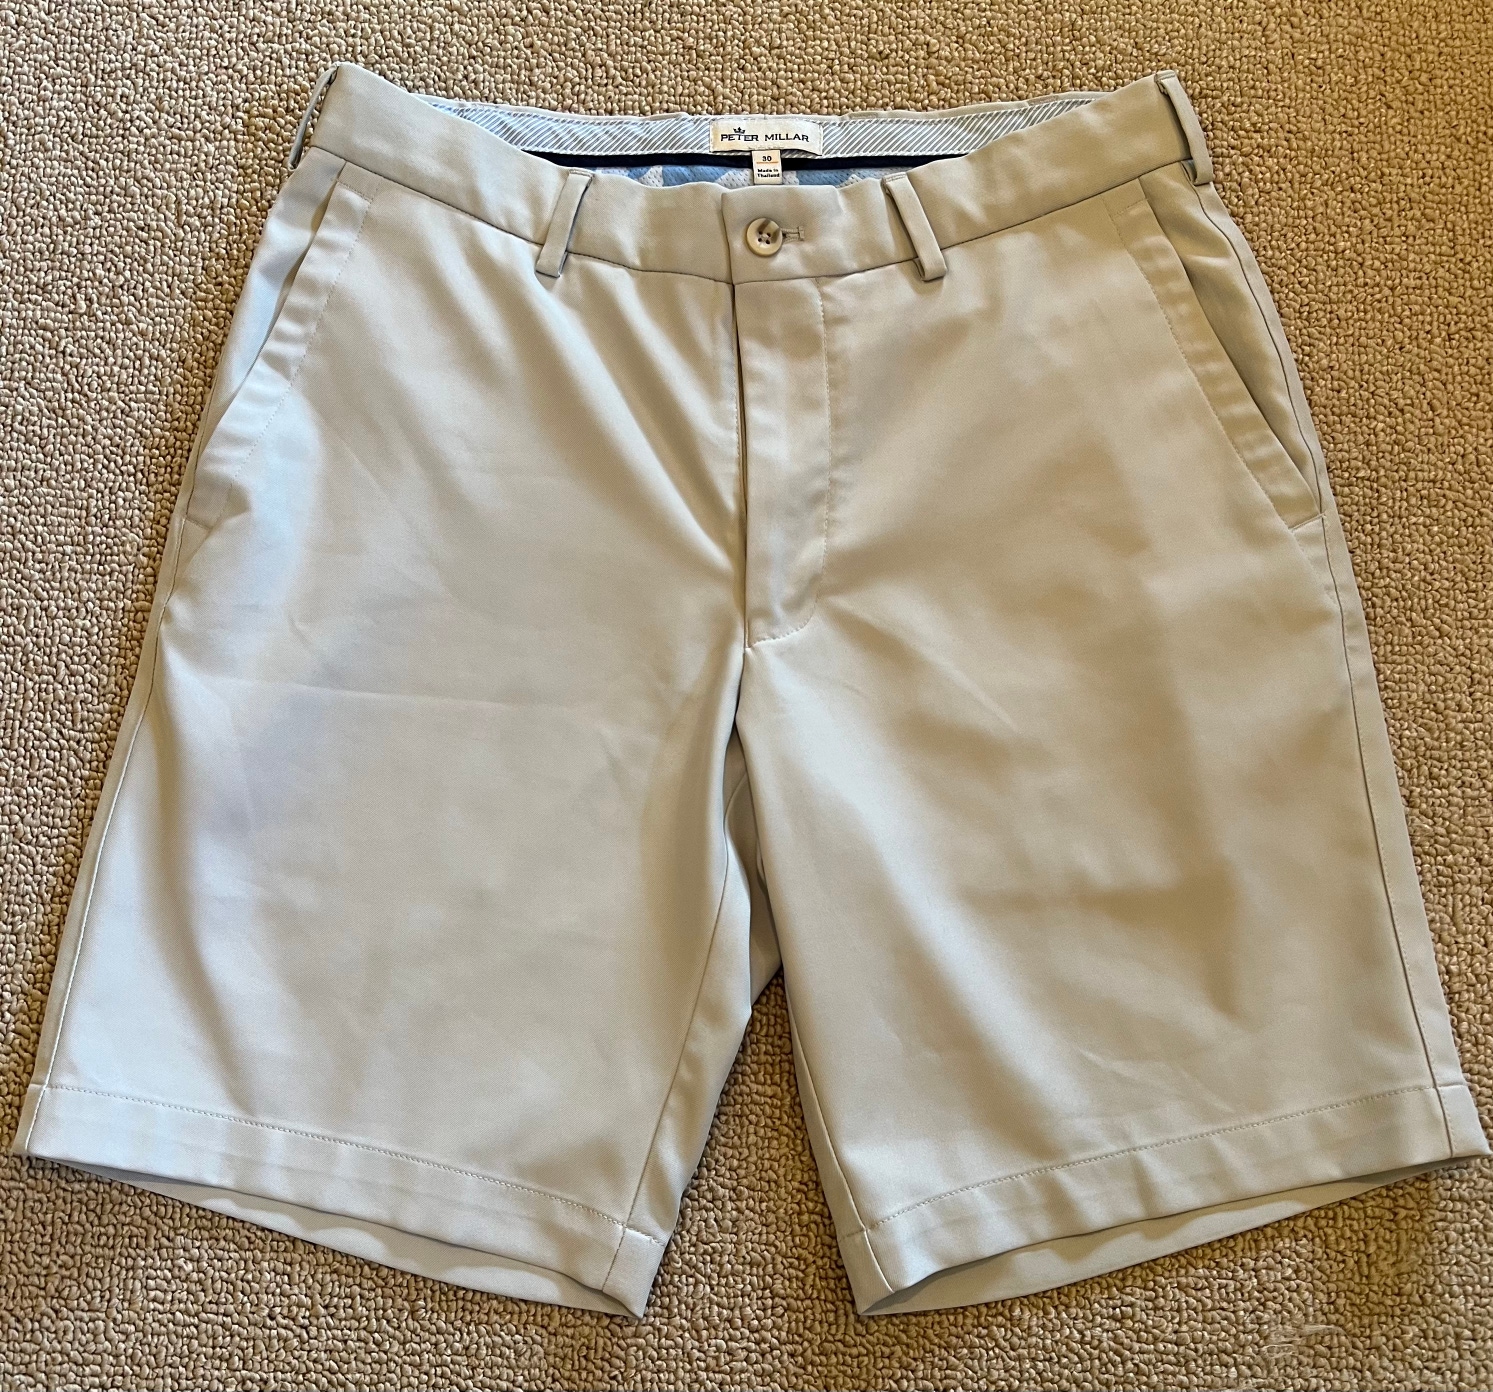 Peter Millar Golf shorts Men’s Size 30